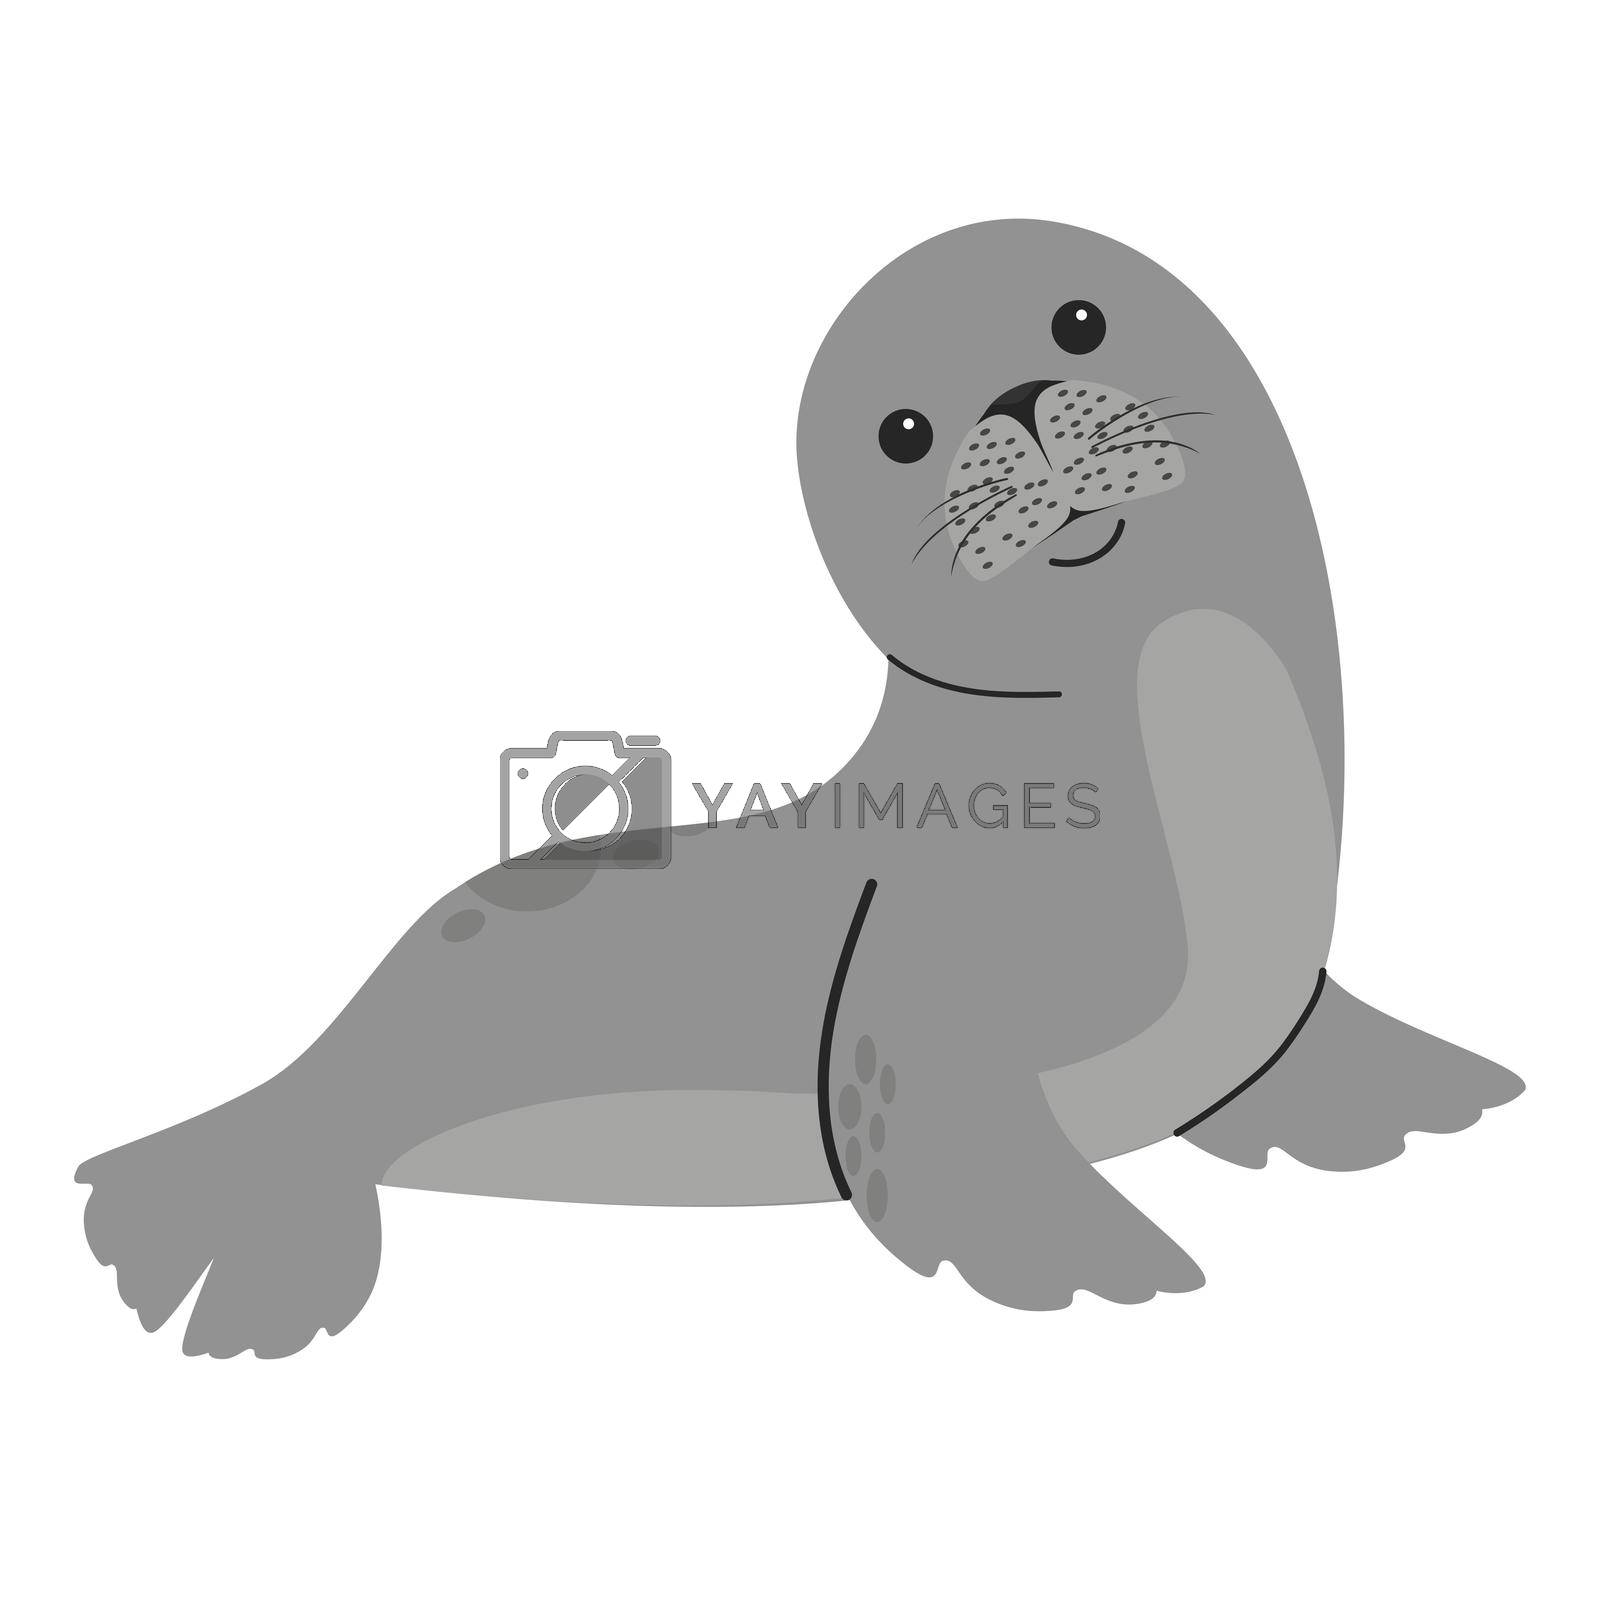 Royalty free image of cute Seal animal cartoon vector by focus_bell